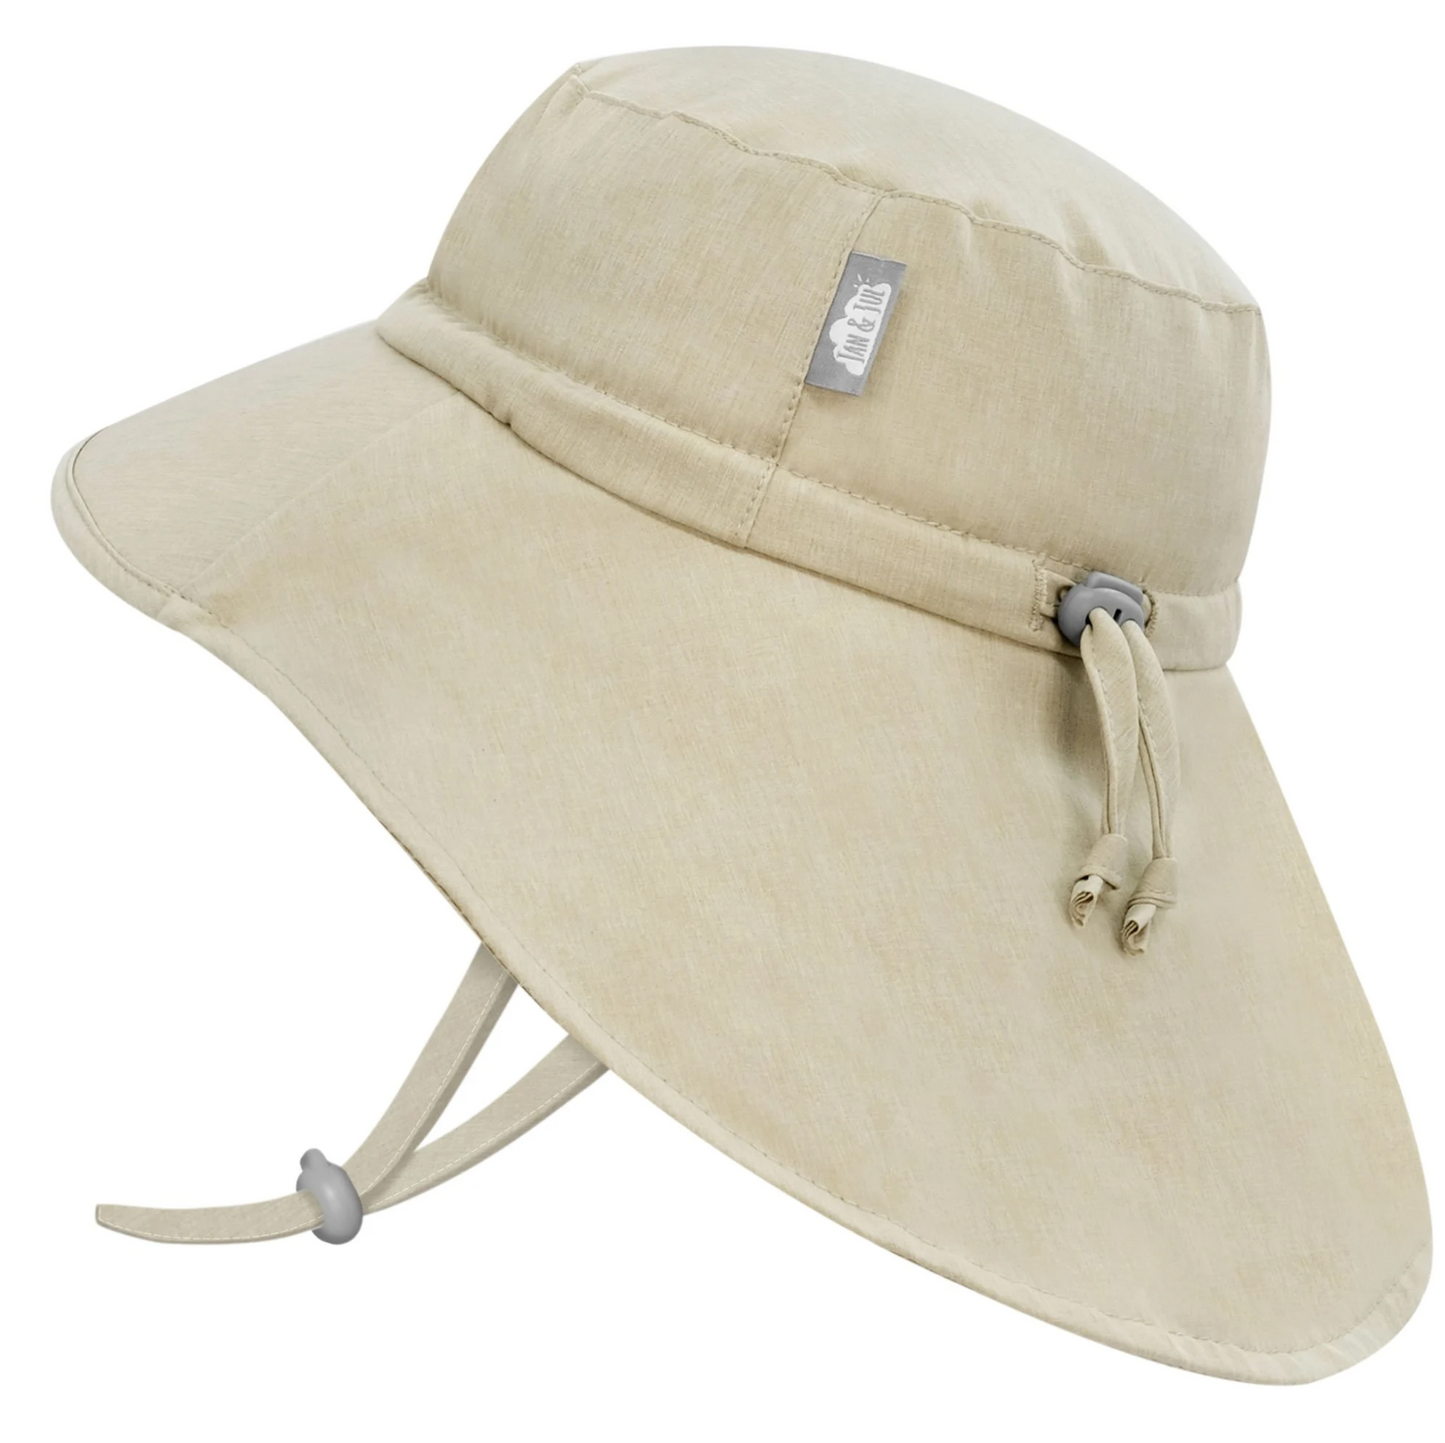 Jan & Jul - Aqua Dry Adventure Hats